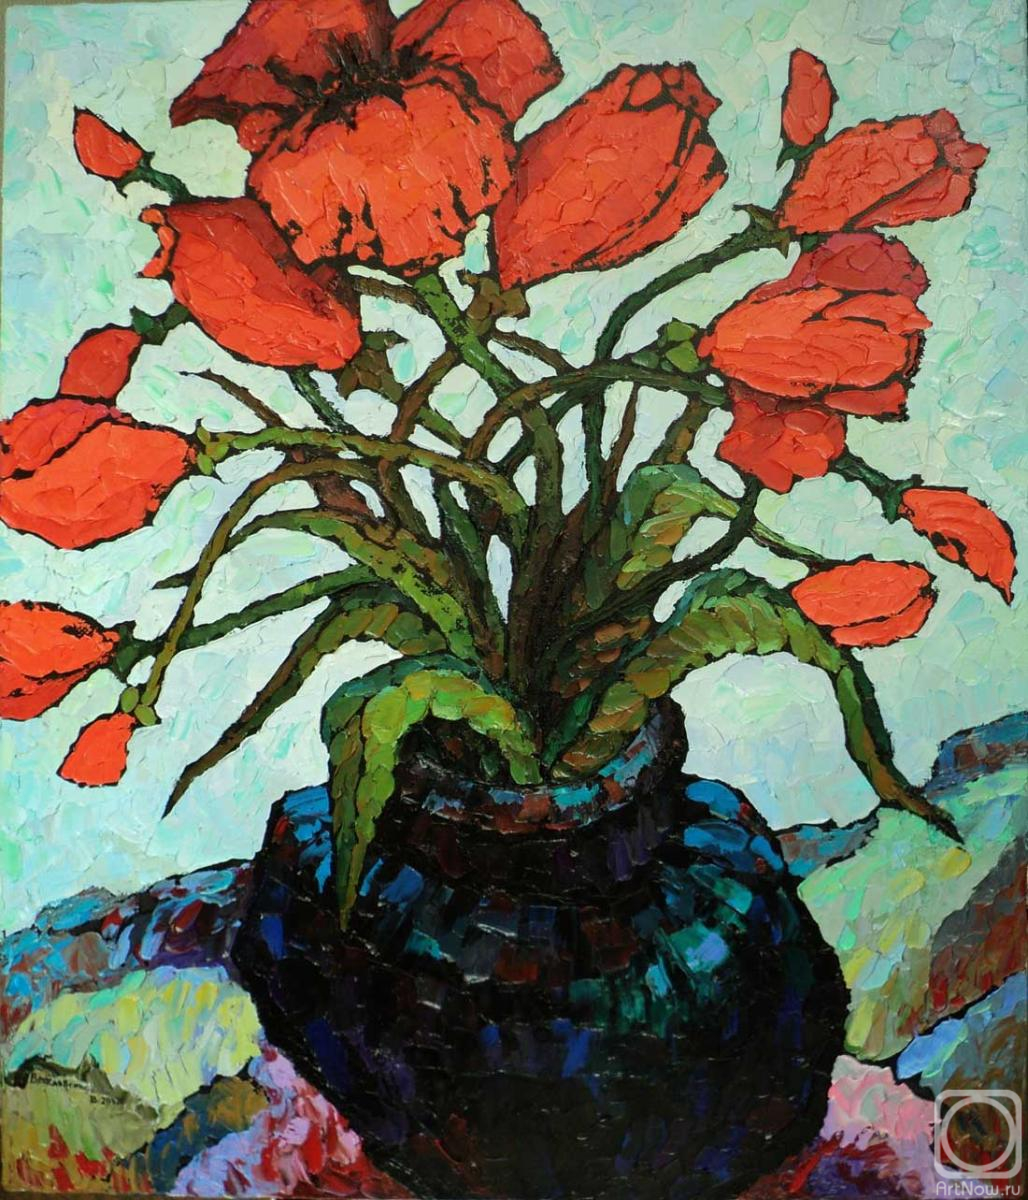 Veselovsky Valery. Red flowers (sketch)